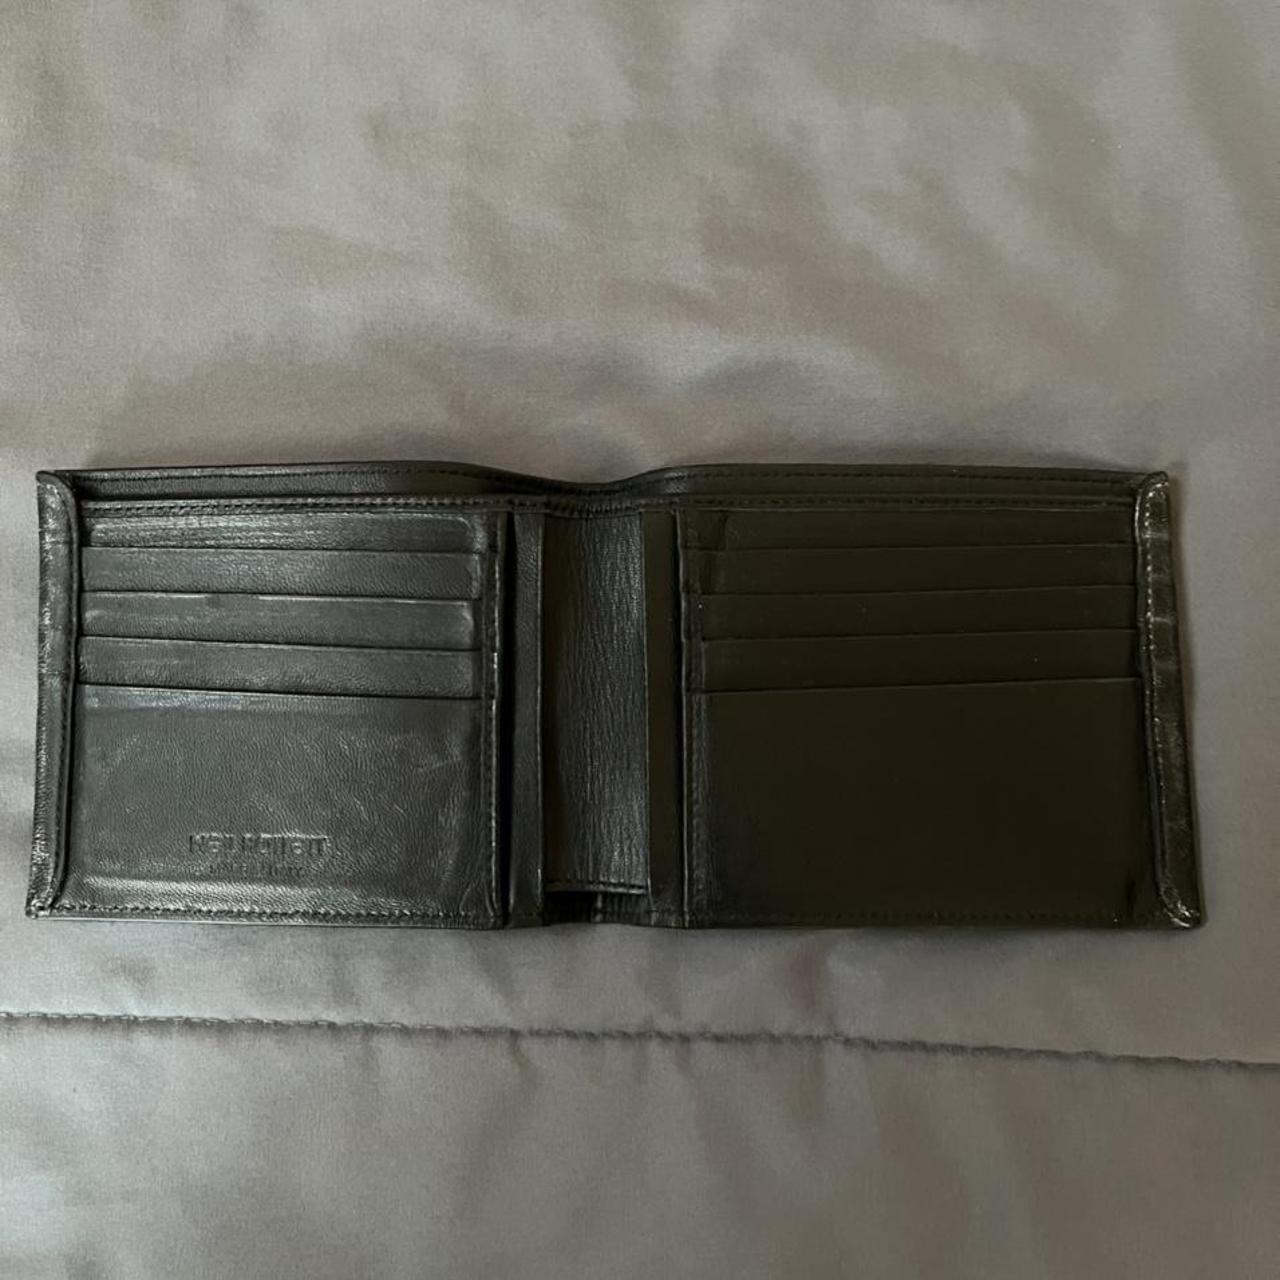 Product Image 2 - Neil Barrett Bifold wallet. Leather.